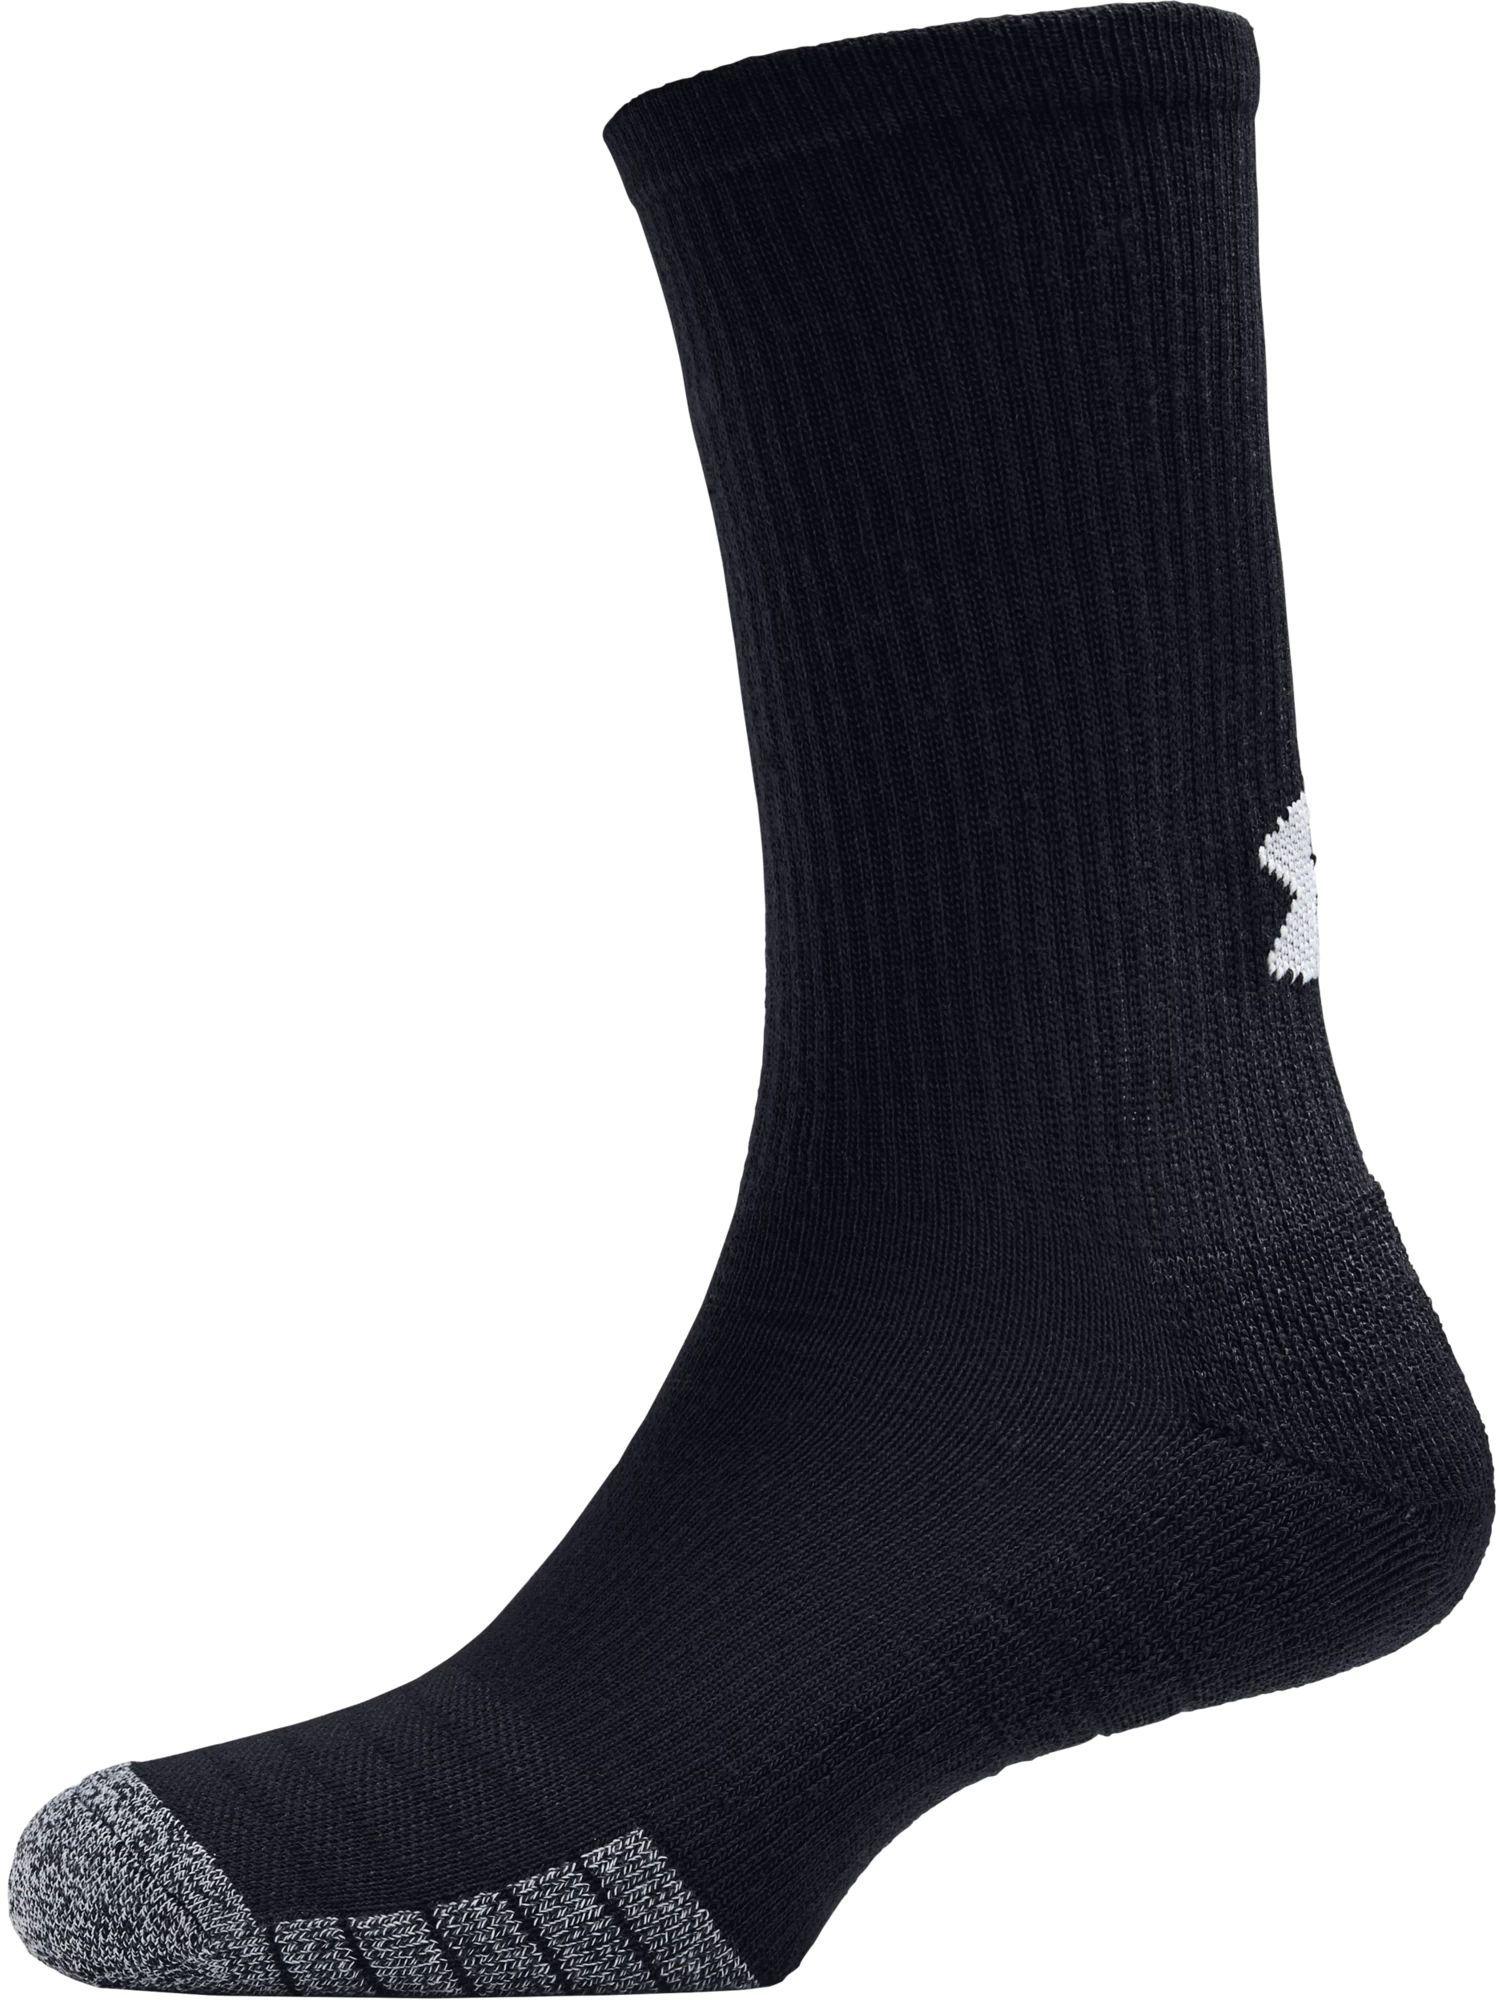 unisex heat gear crew socks - black (pack of 3)